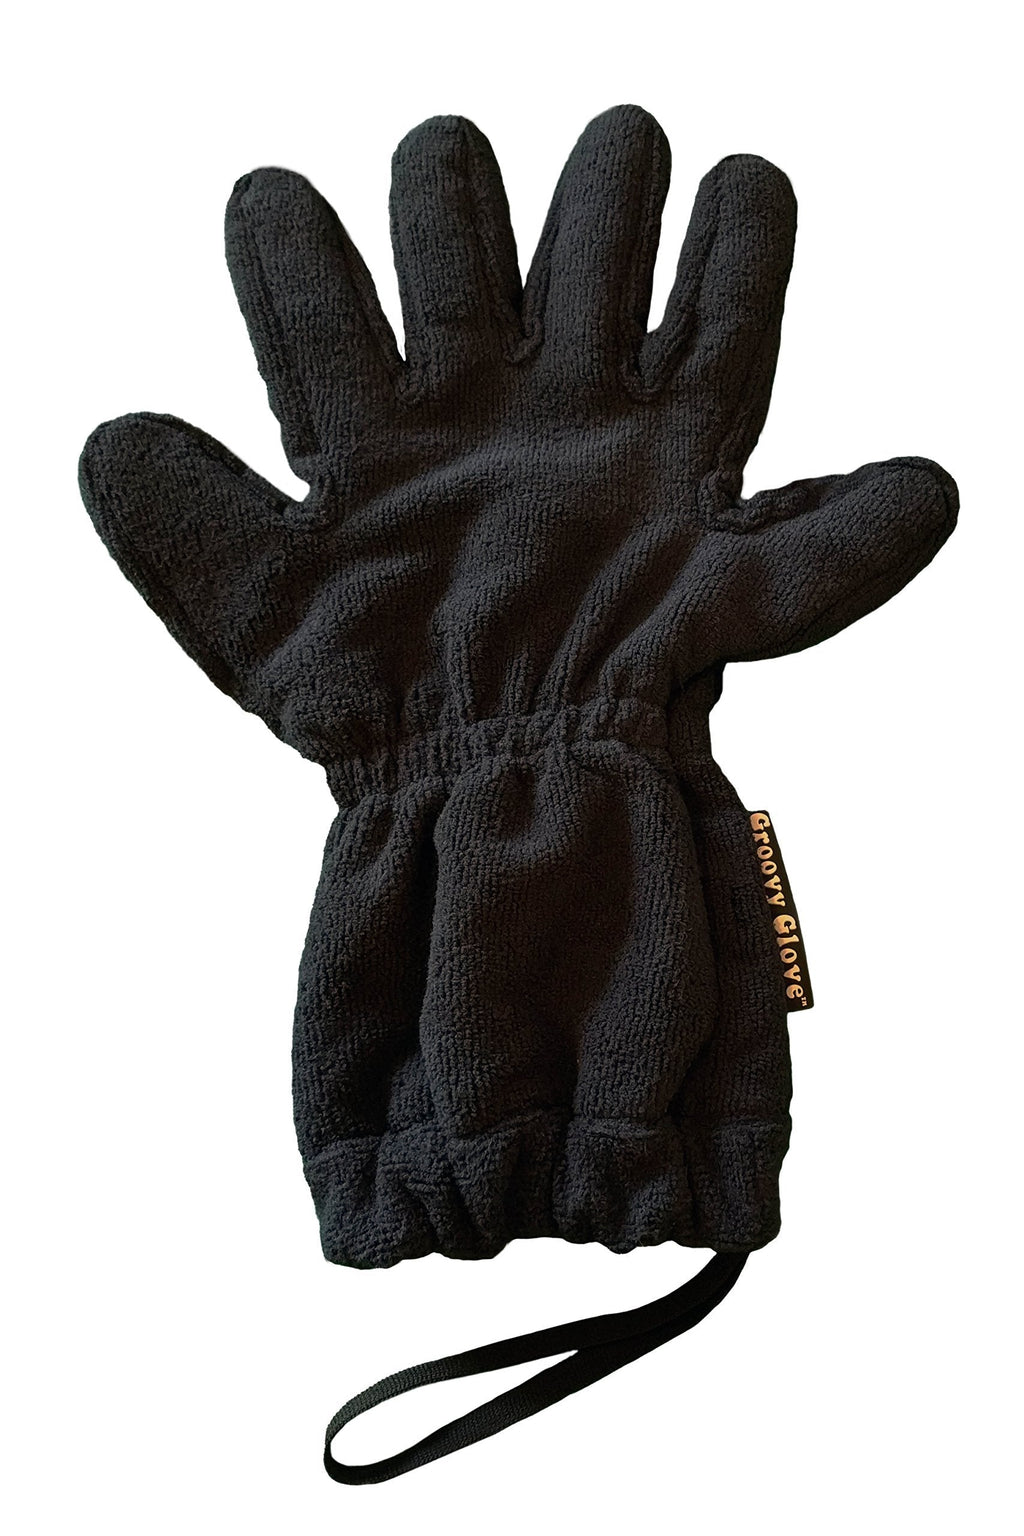 [Australia] - Groovy Glove Change The Way You Clean (Black) 